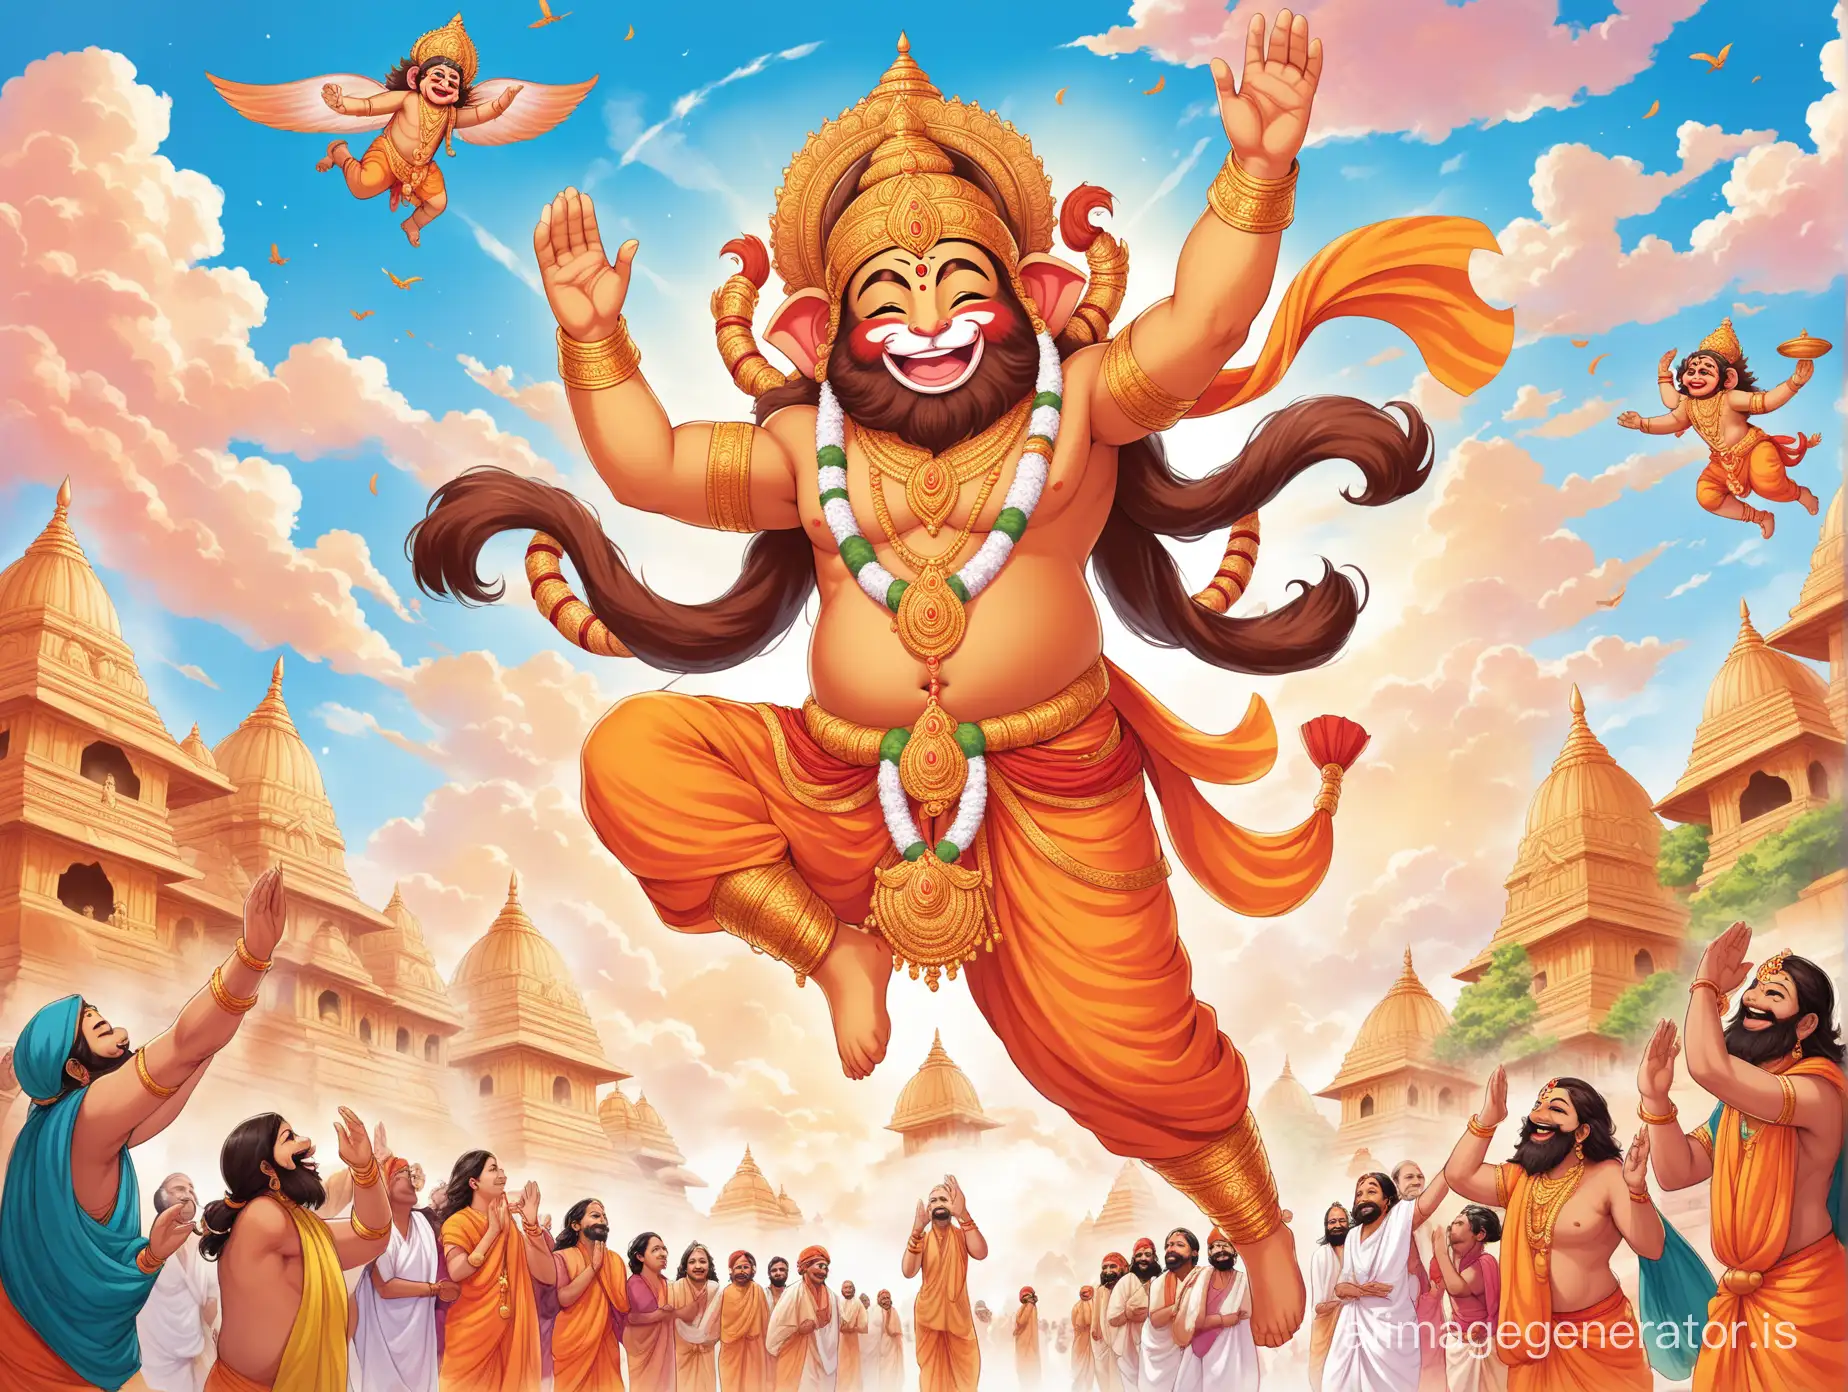 Giant-Hanumanji-Spreading-Joy-with-SkyHigh-Antics